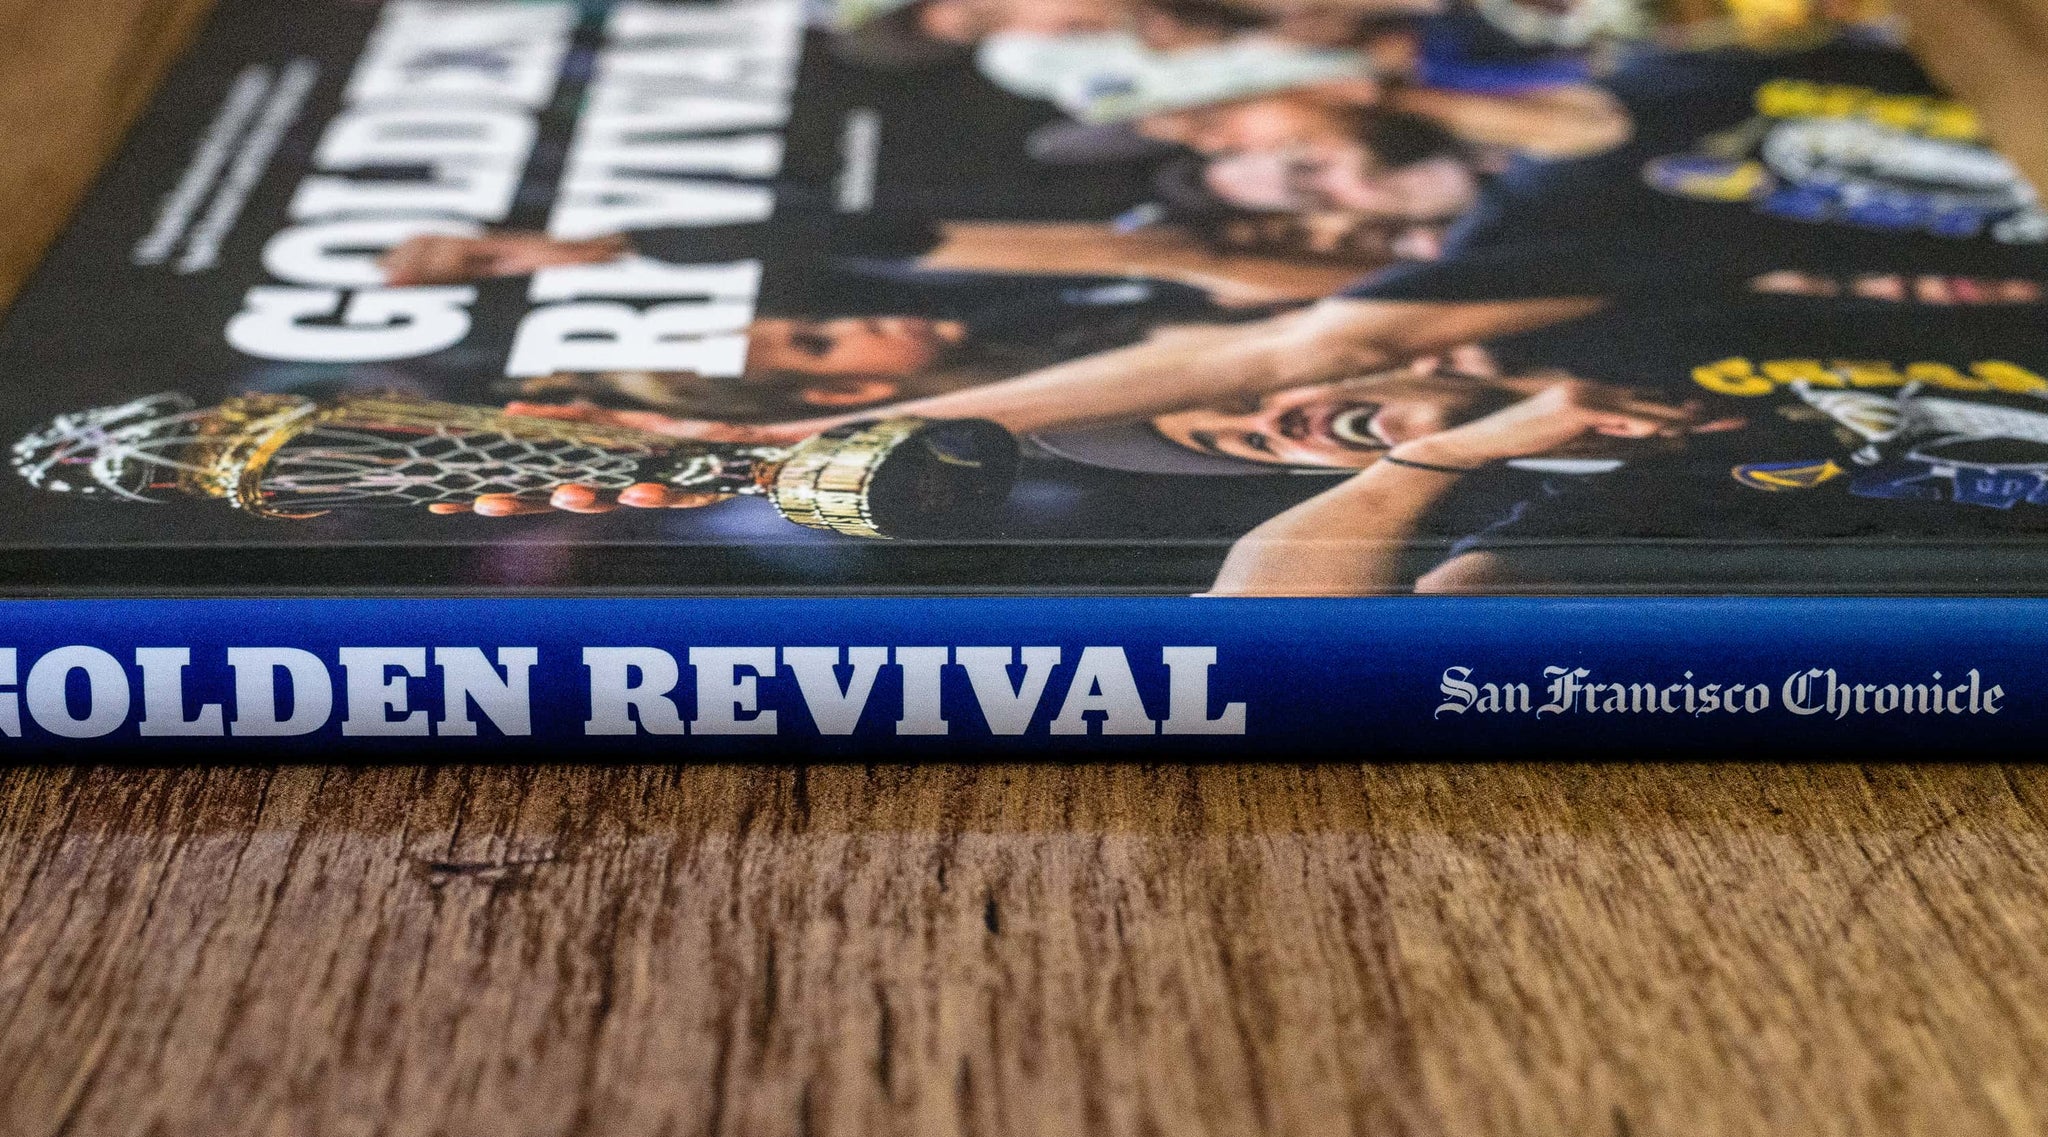 San Francisco Chronicle book 'Golden Revival' celebrates Golden